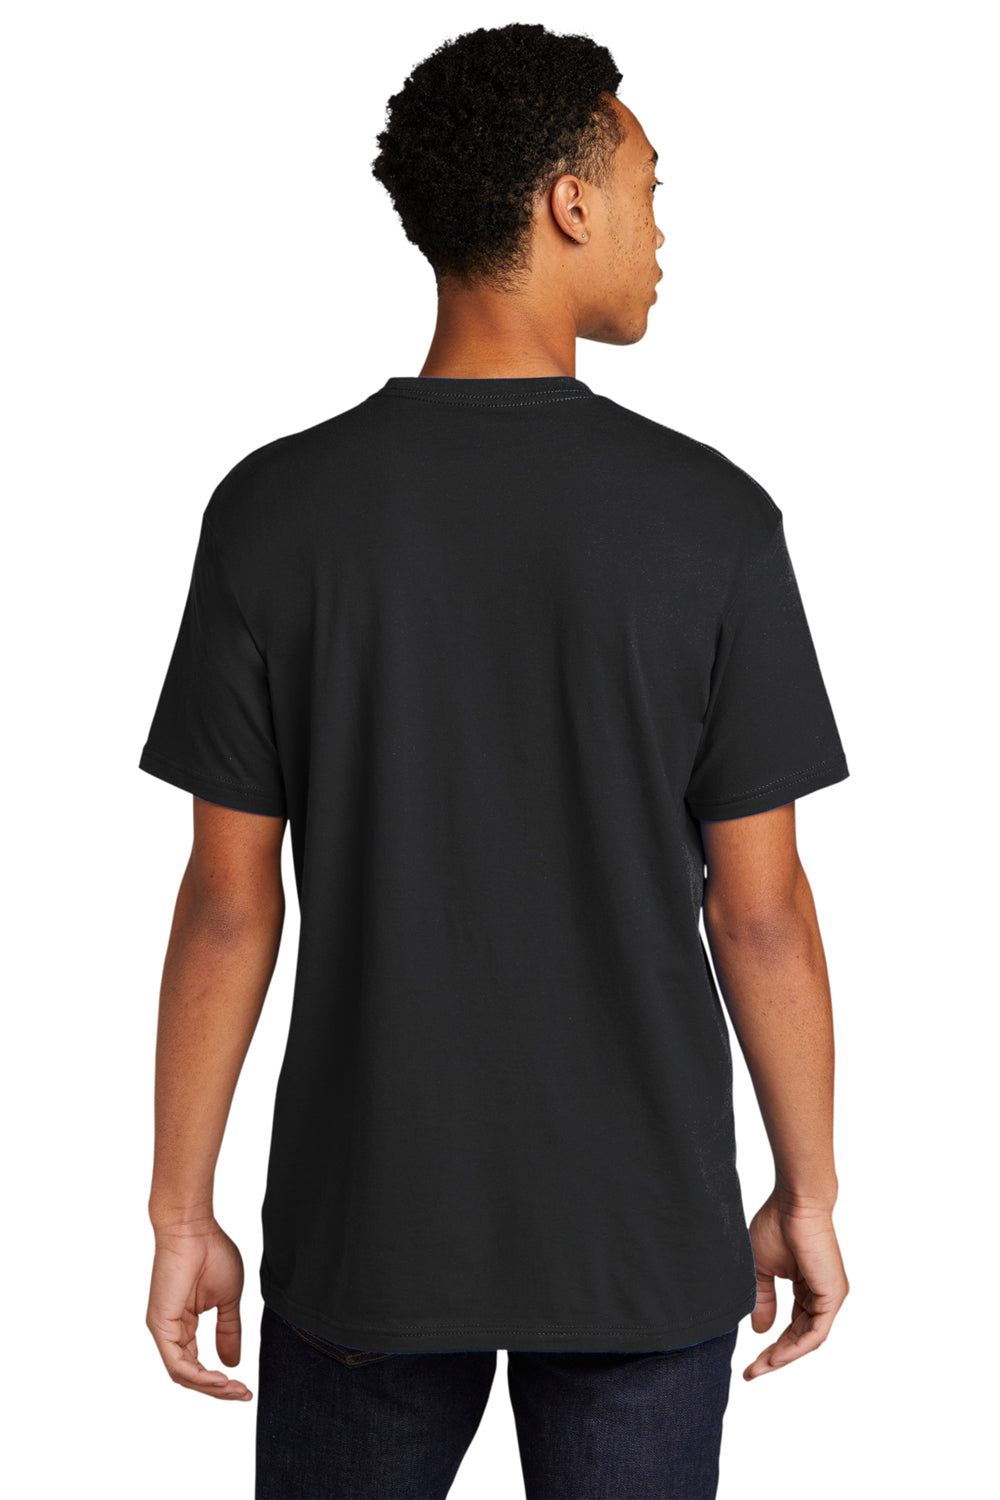 Next Level Men's Black Unisex Pocket Crew T-Shirt